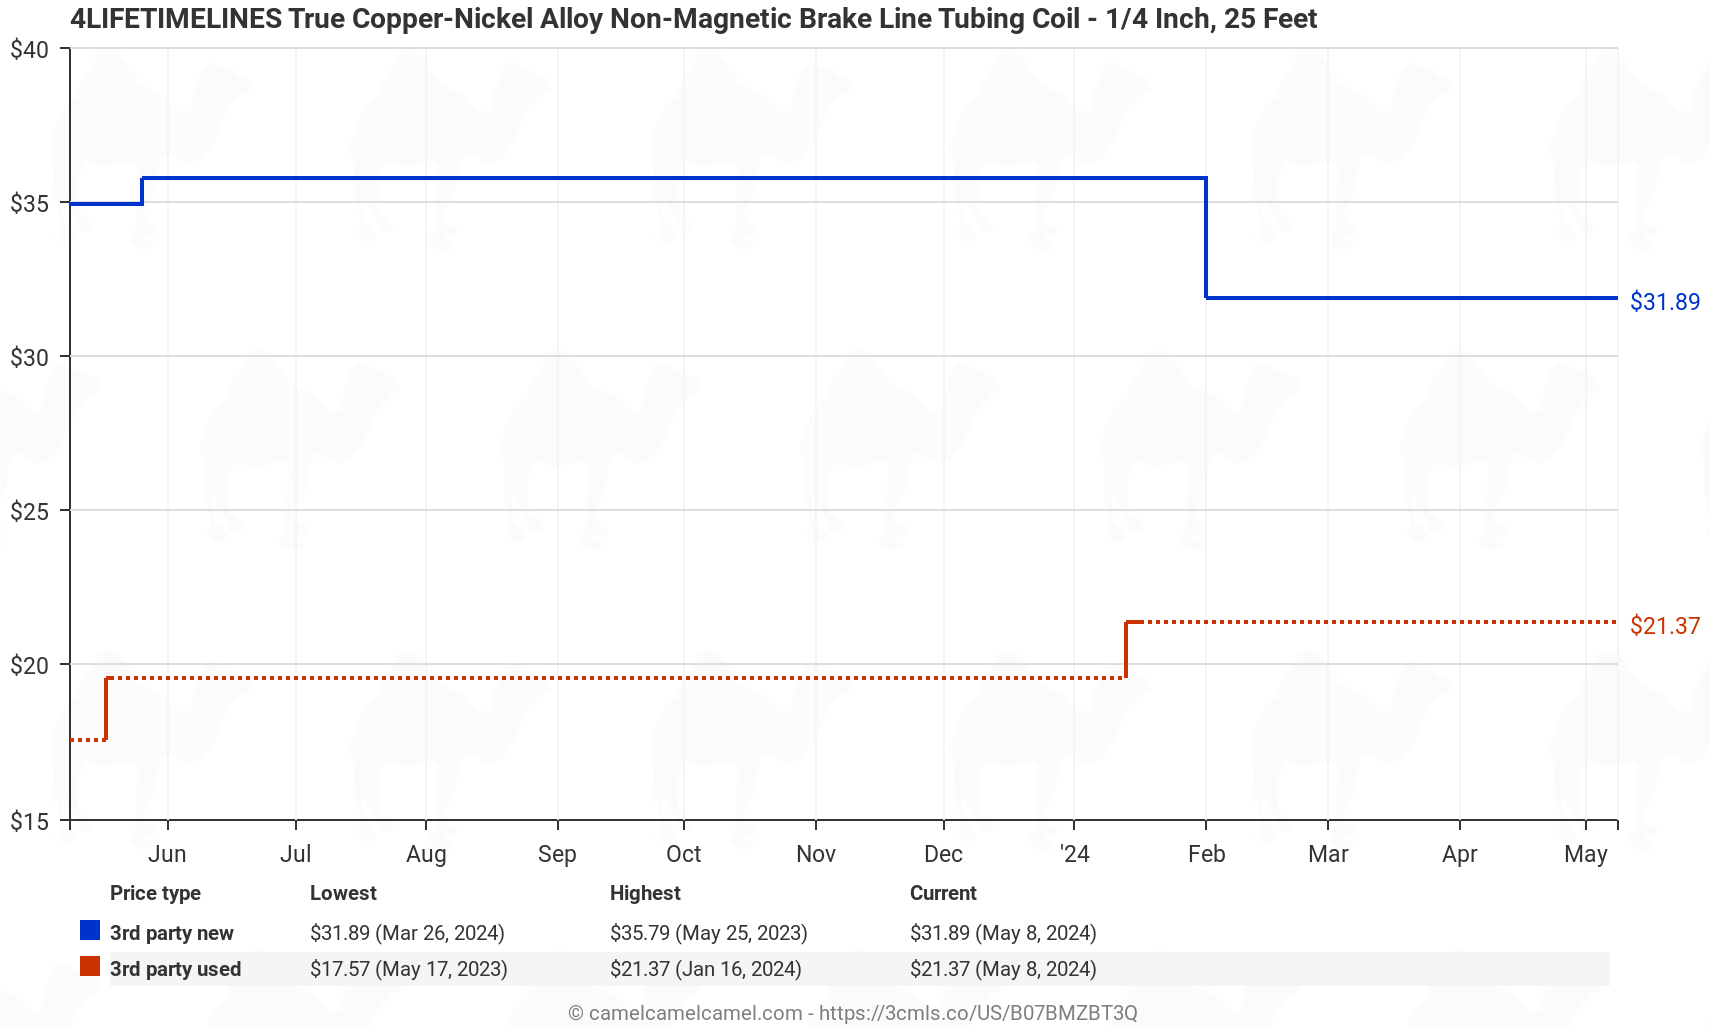 4LIFETIMELINES True Copper-Nickel Alloy Non-Magnetic Brake Line Tubing Coil - 1/4 Inch, 25 Feet - Price History: B07BMZBT3Q